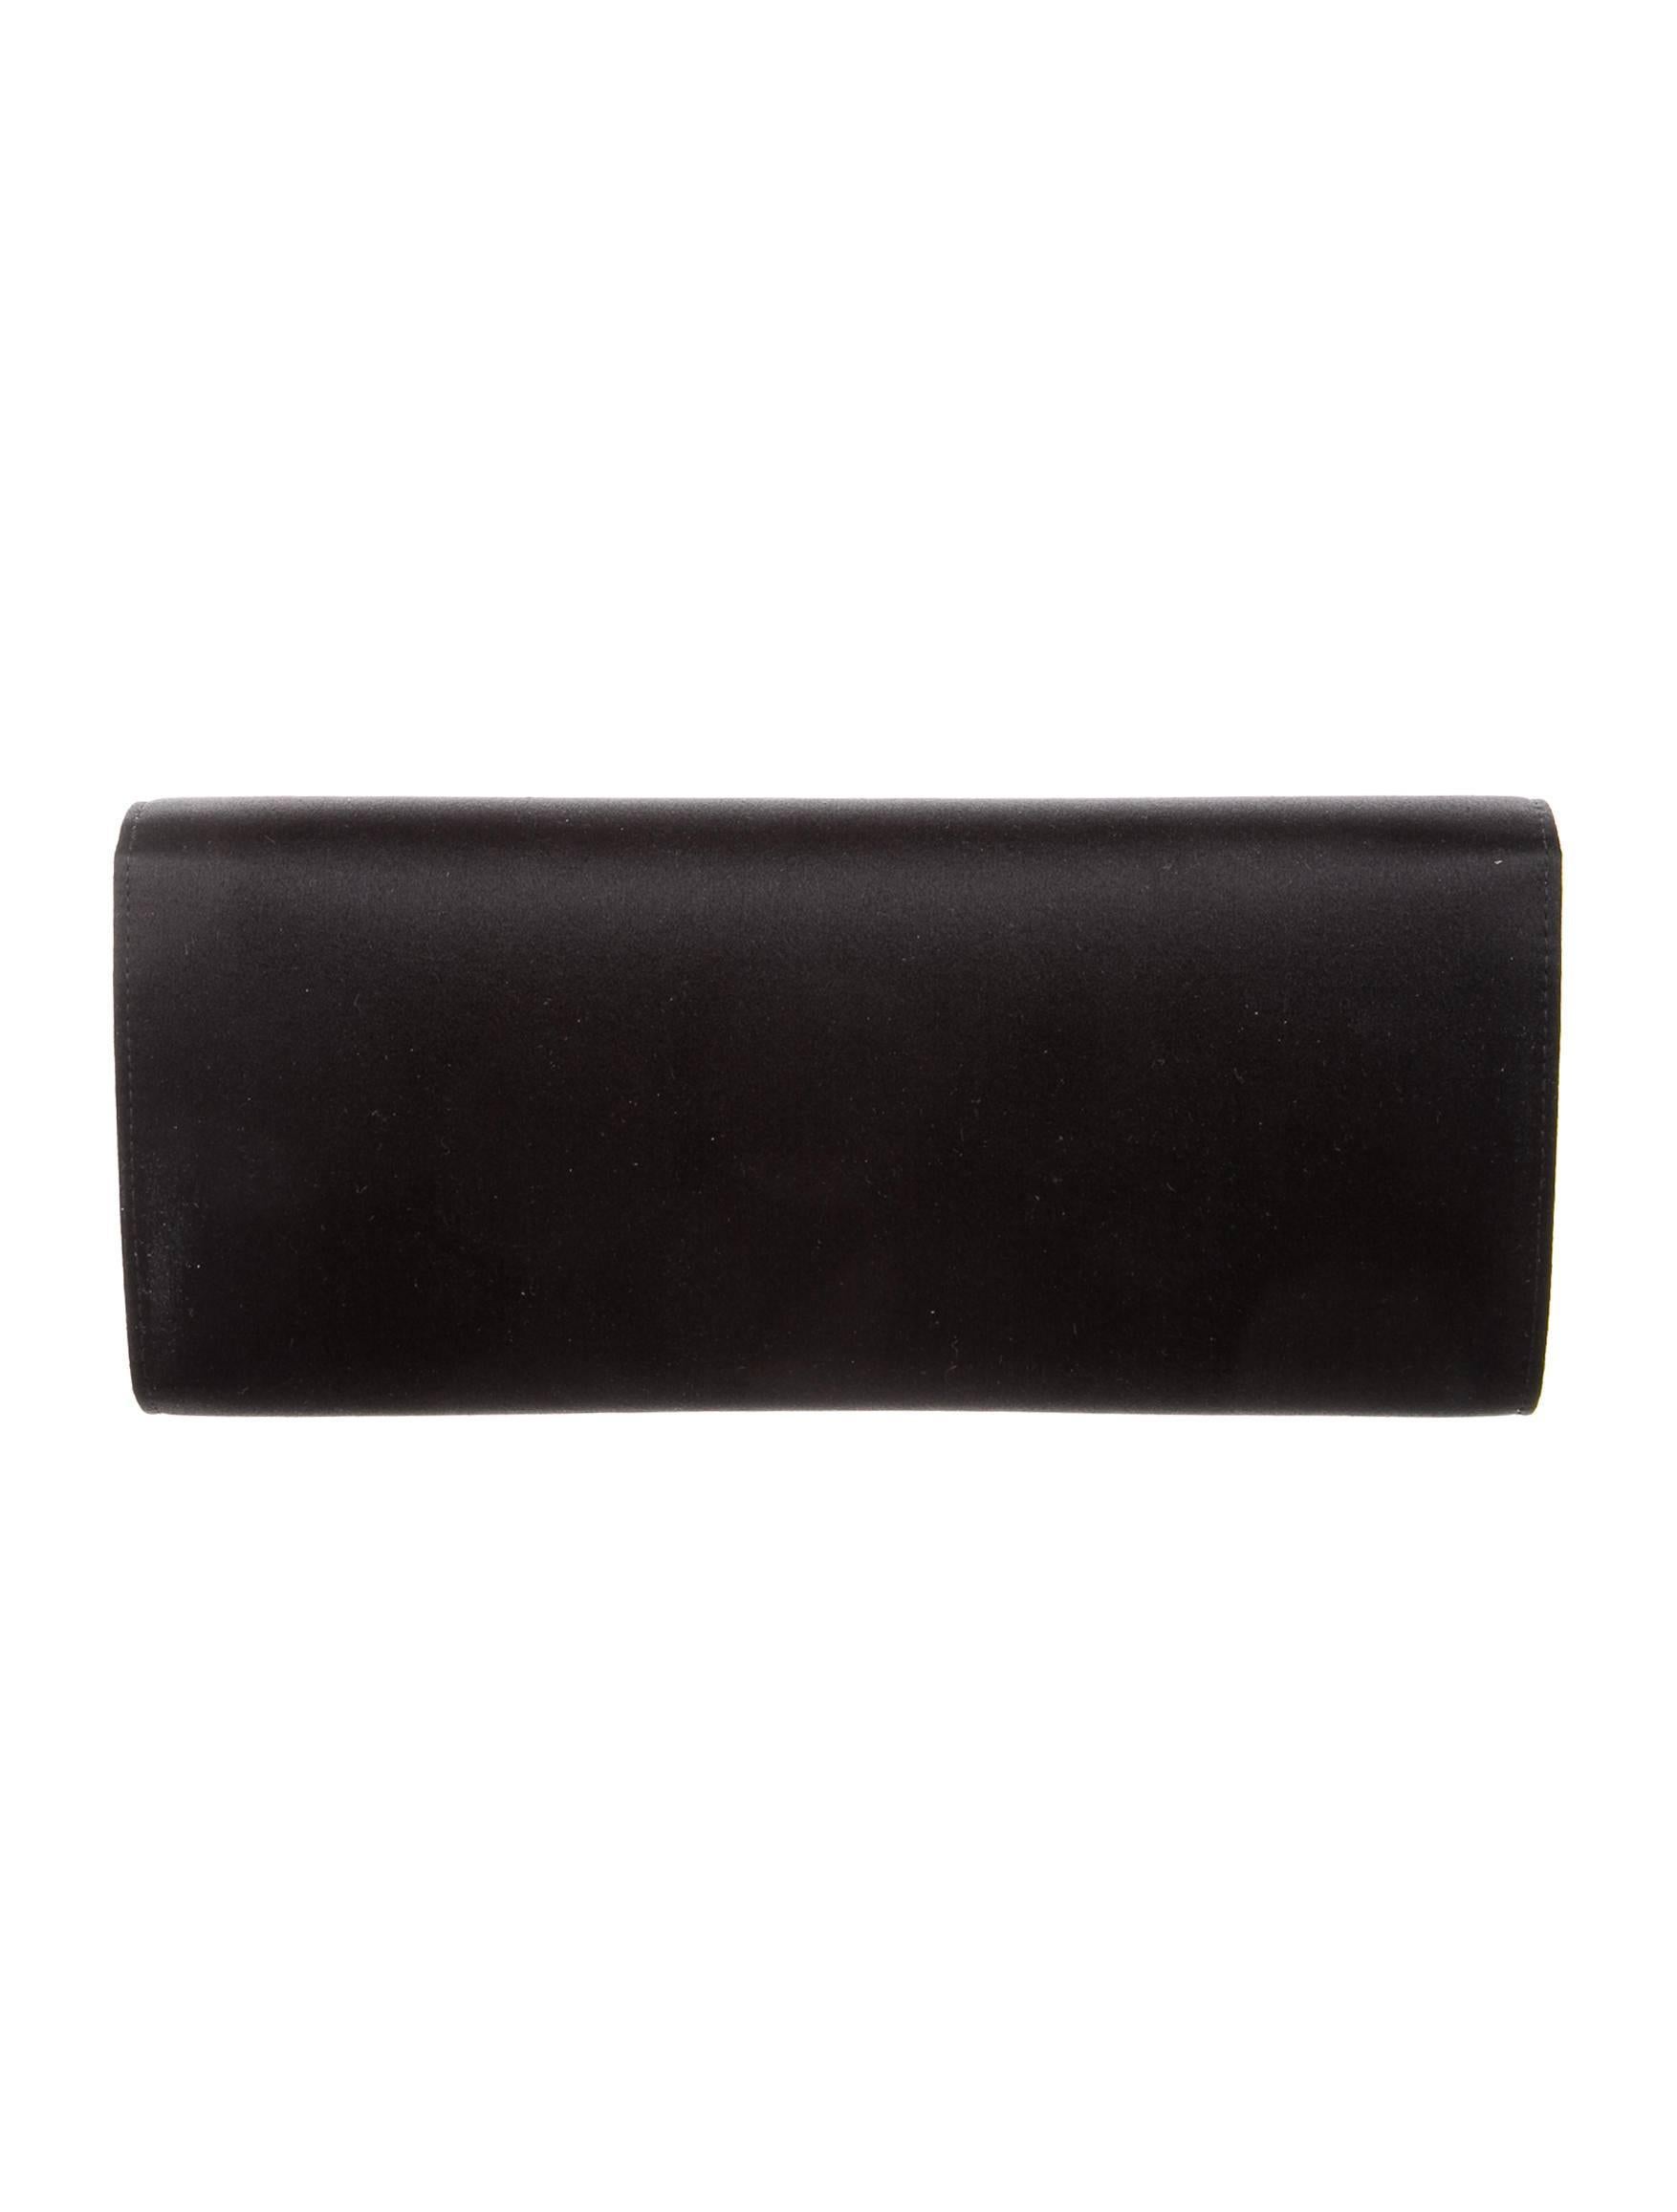 Women's Yves Saint Laurent NEW & UNUSED Black Gold Buckle Evening Clutch Flap Bag